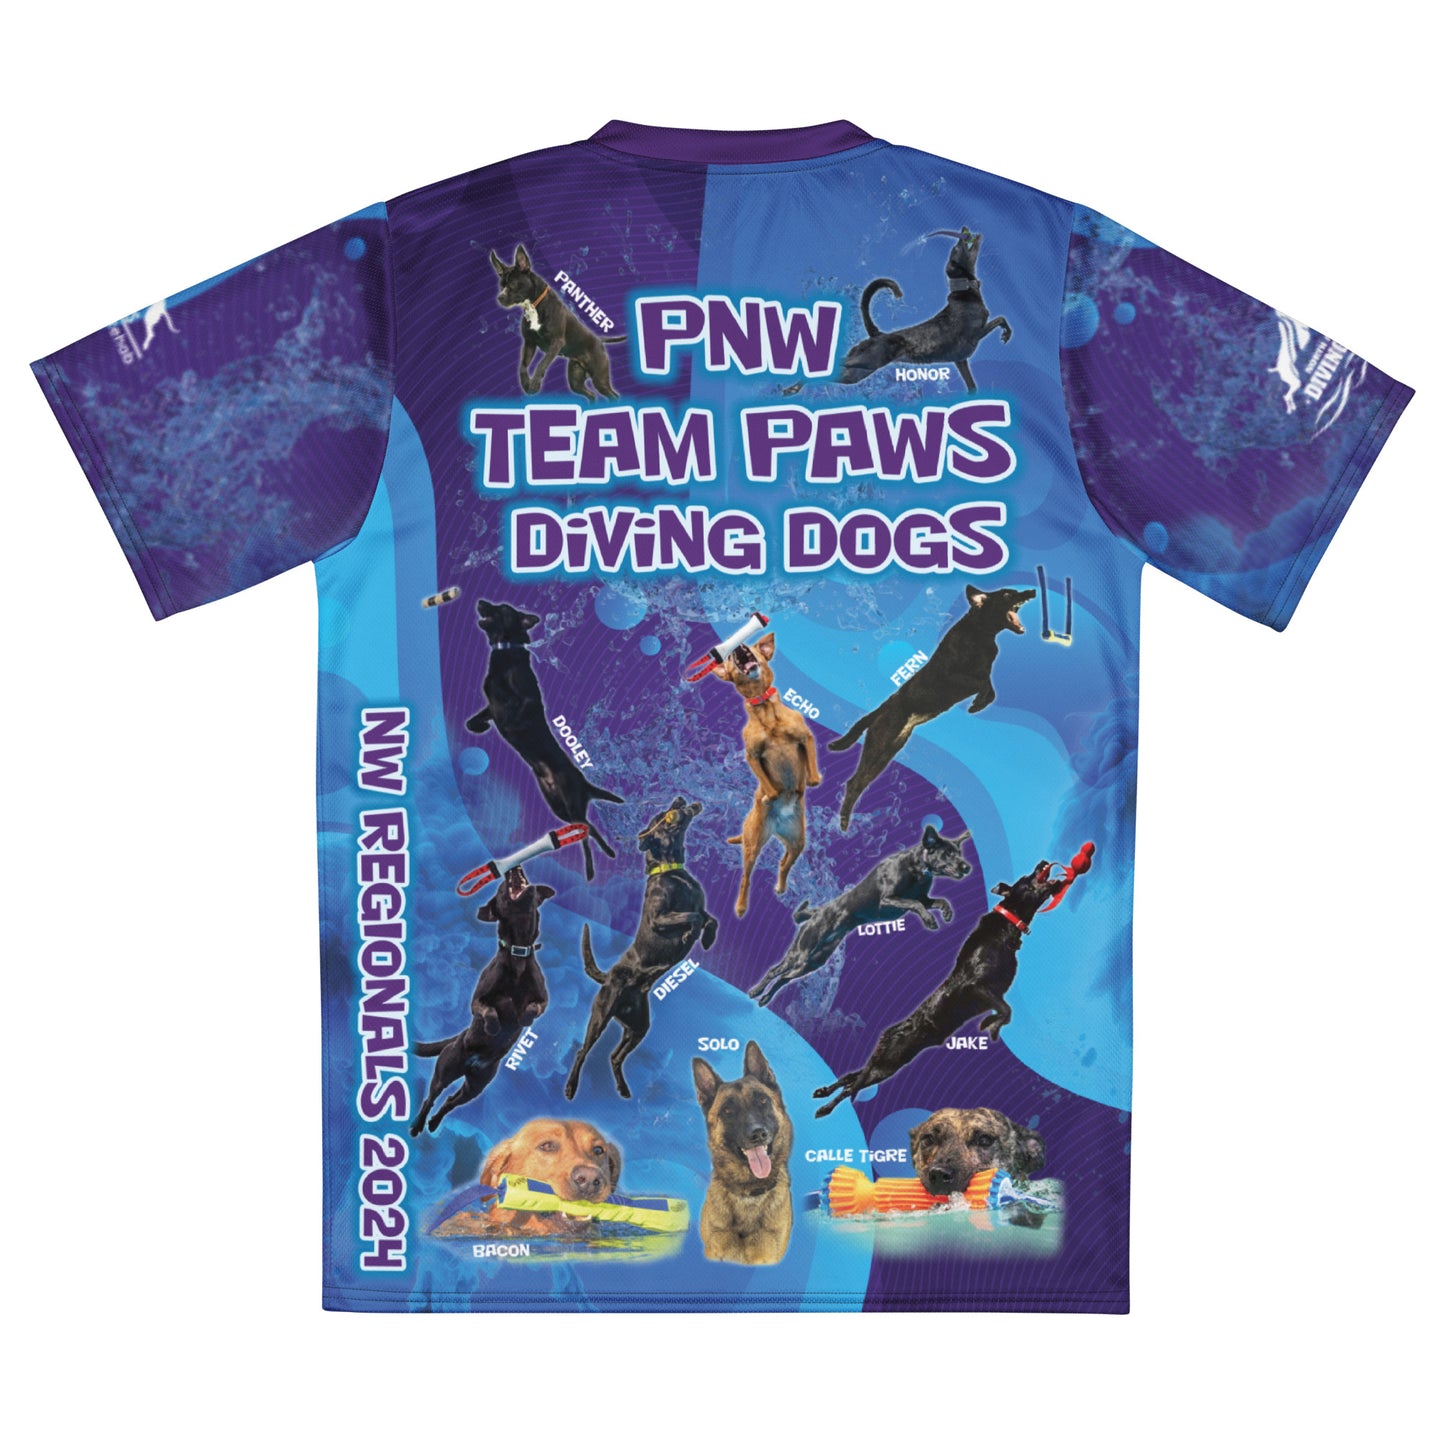 PNW TEAM PAWS Unisex sports jersey